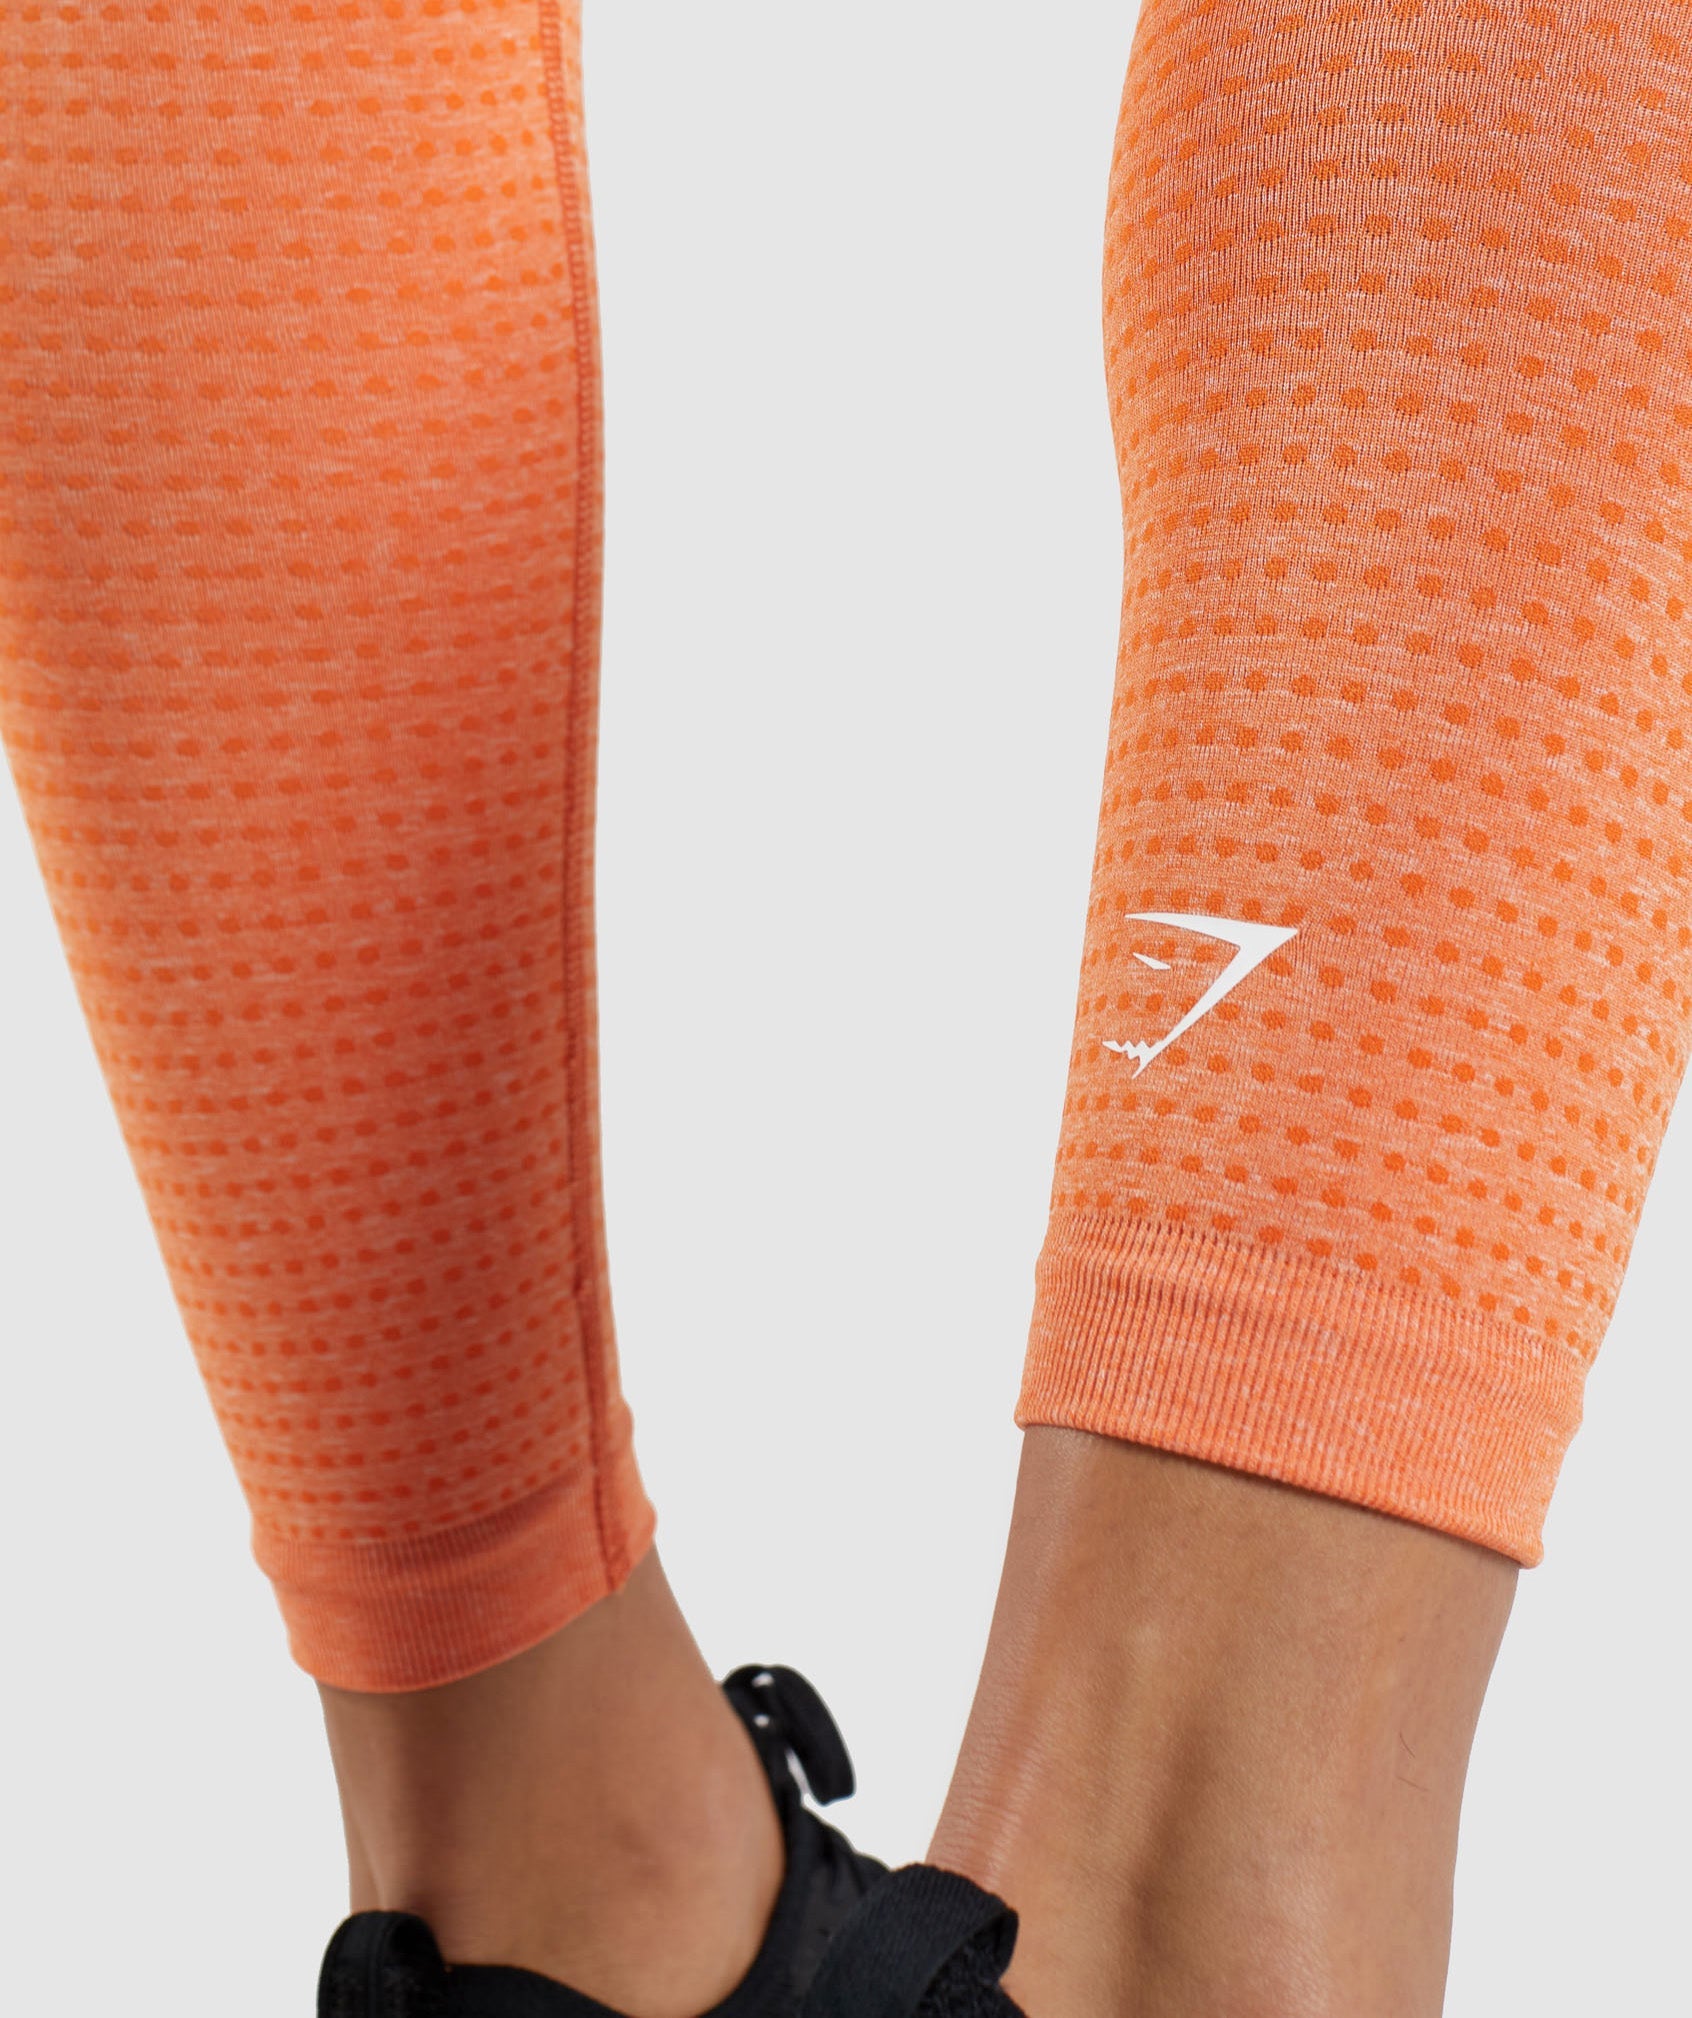 Gymshark Vital Seamless Leggings Orange Size XS - $29 (51% Off